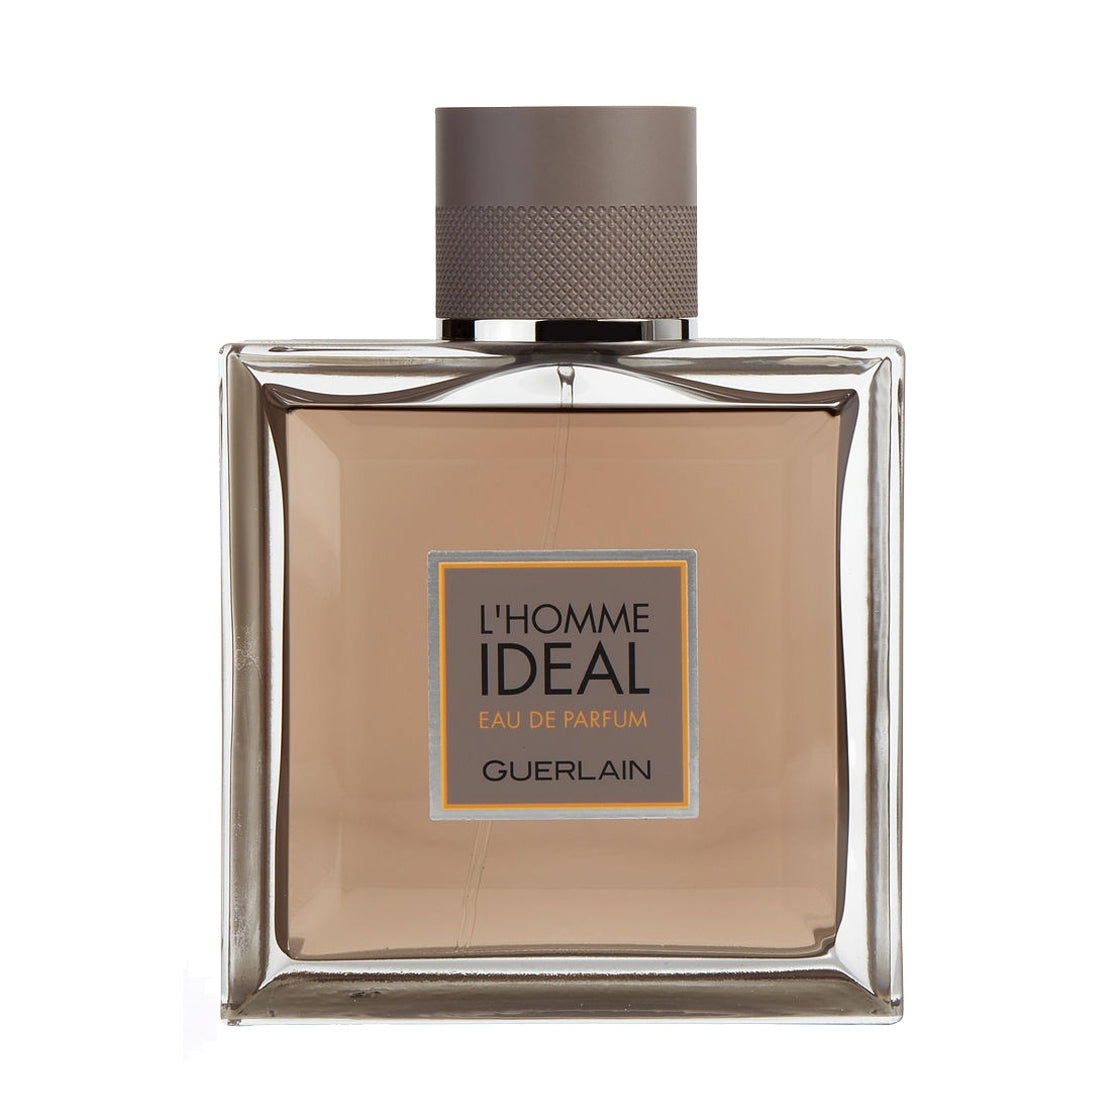 Torino21 Xerjoff perfume - a fragrance for women and men 2021